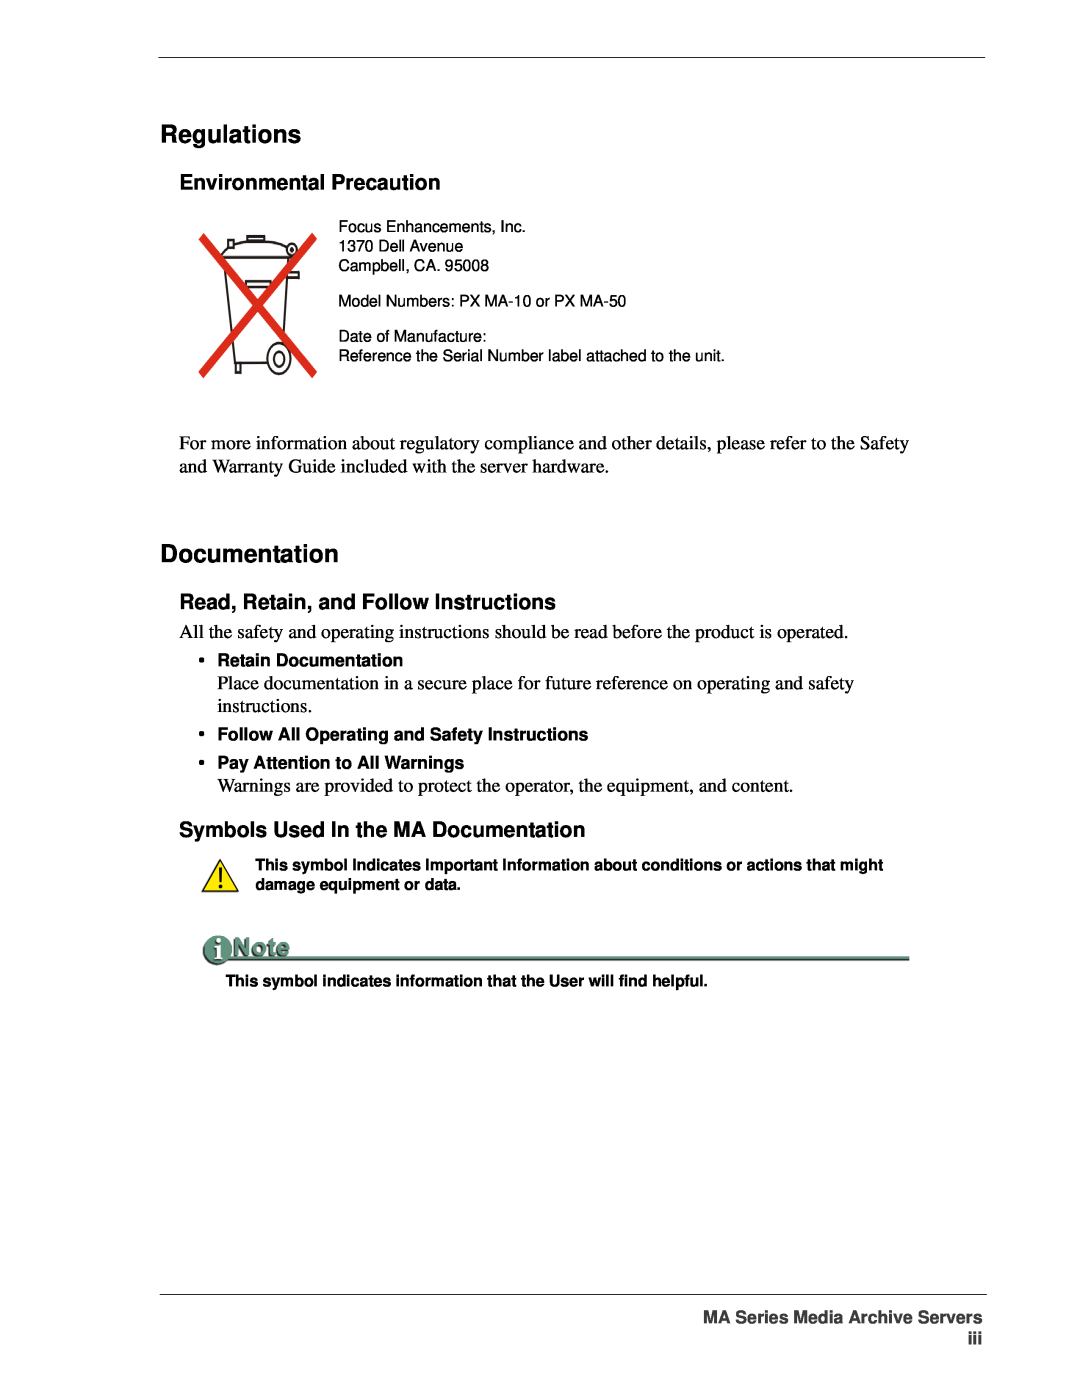 FOCUS Enhancements MANL-1161-04 manual Regulations, Environmental Precaution, Symbols Used In the MA Documentation 